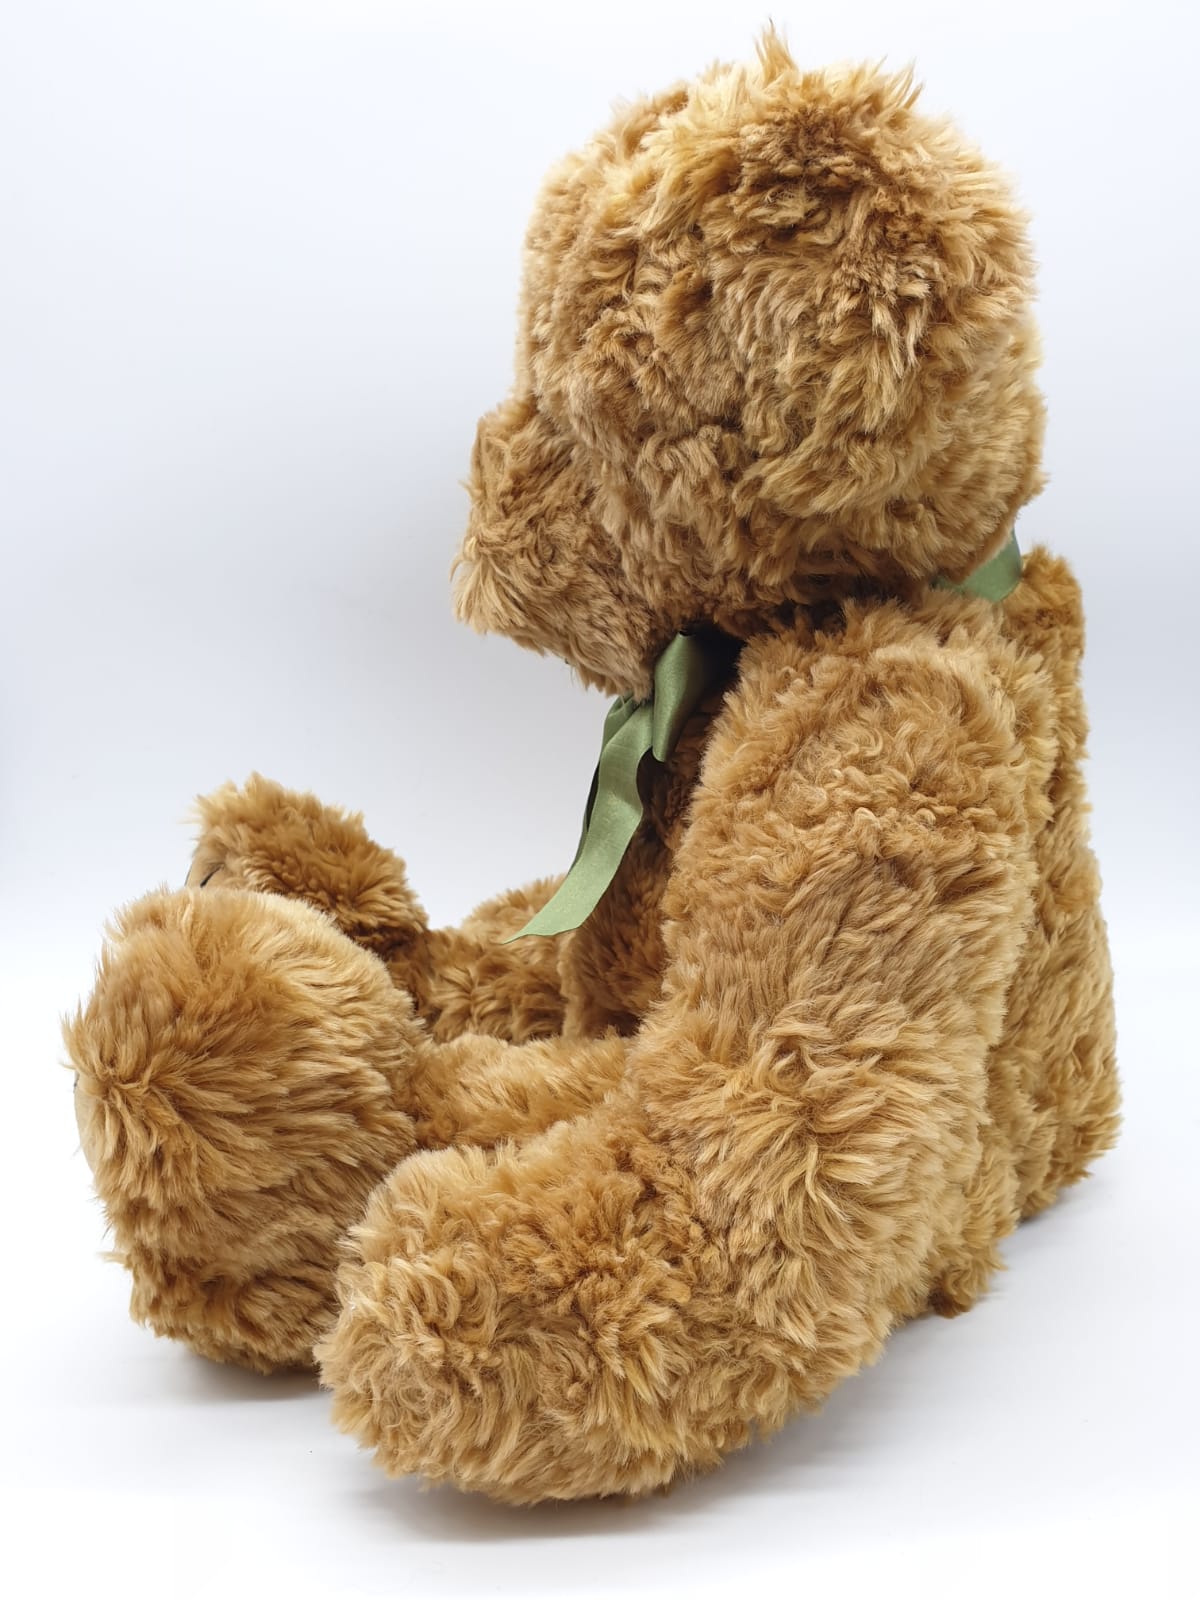 A Harrods Teddy Bear 1990's Approx 30cms - Image 3 of 6